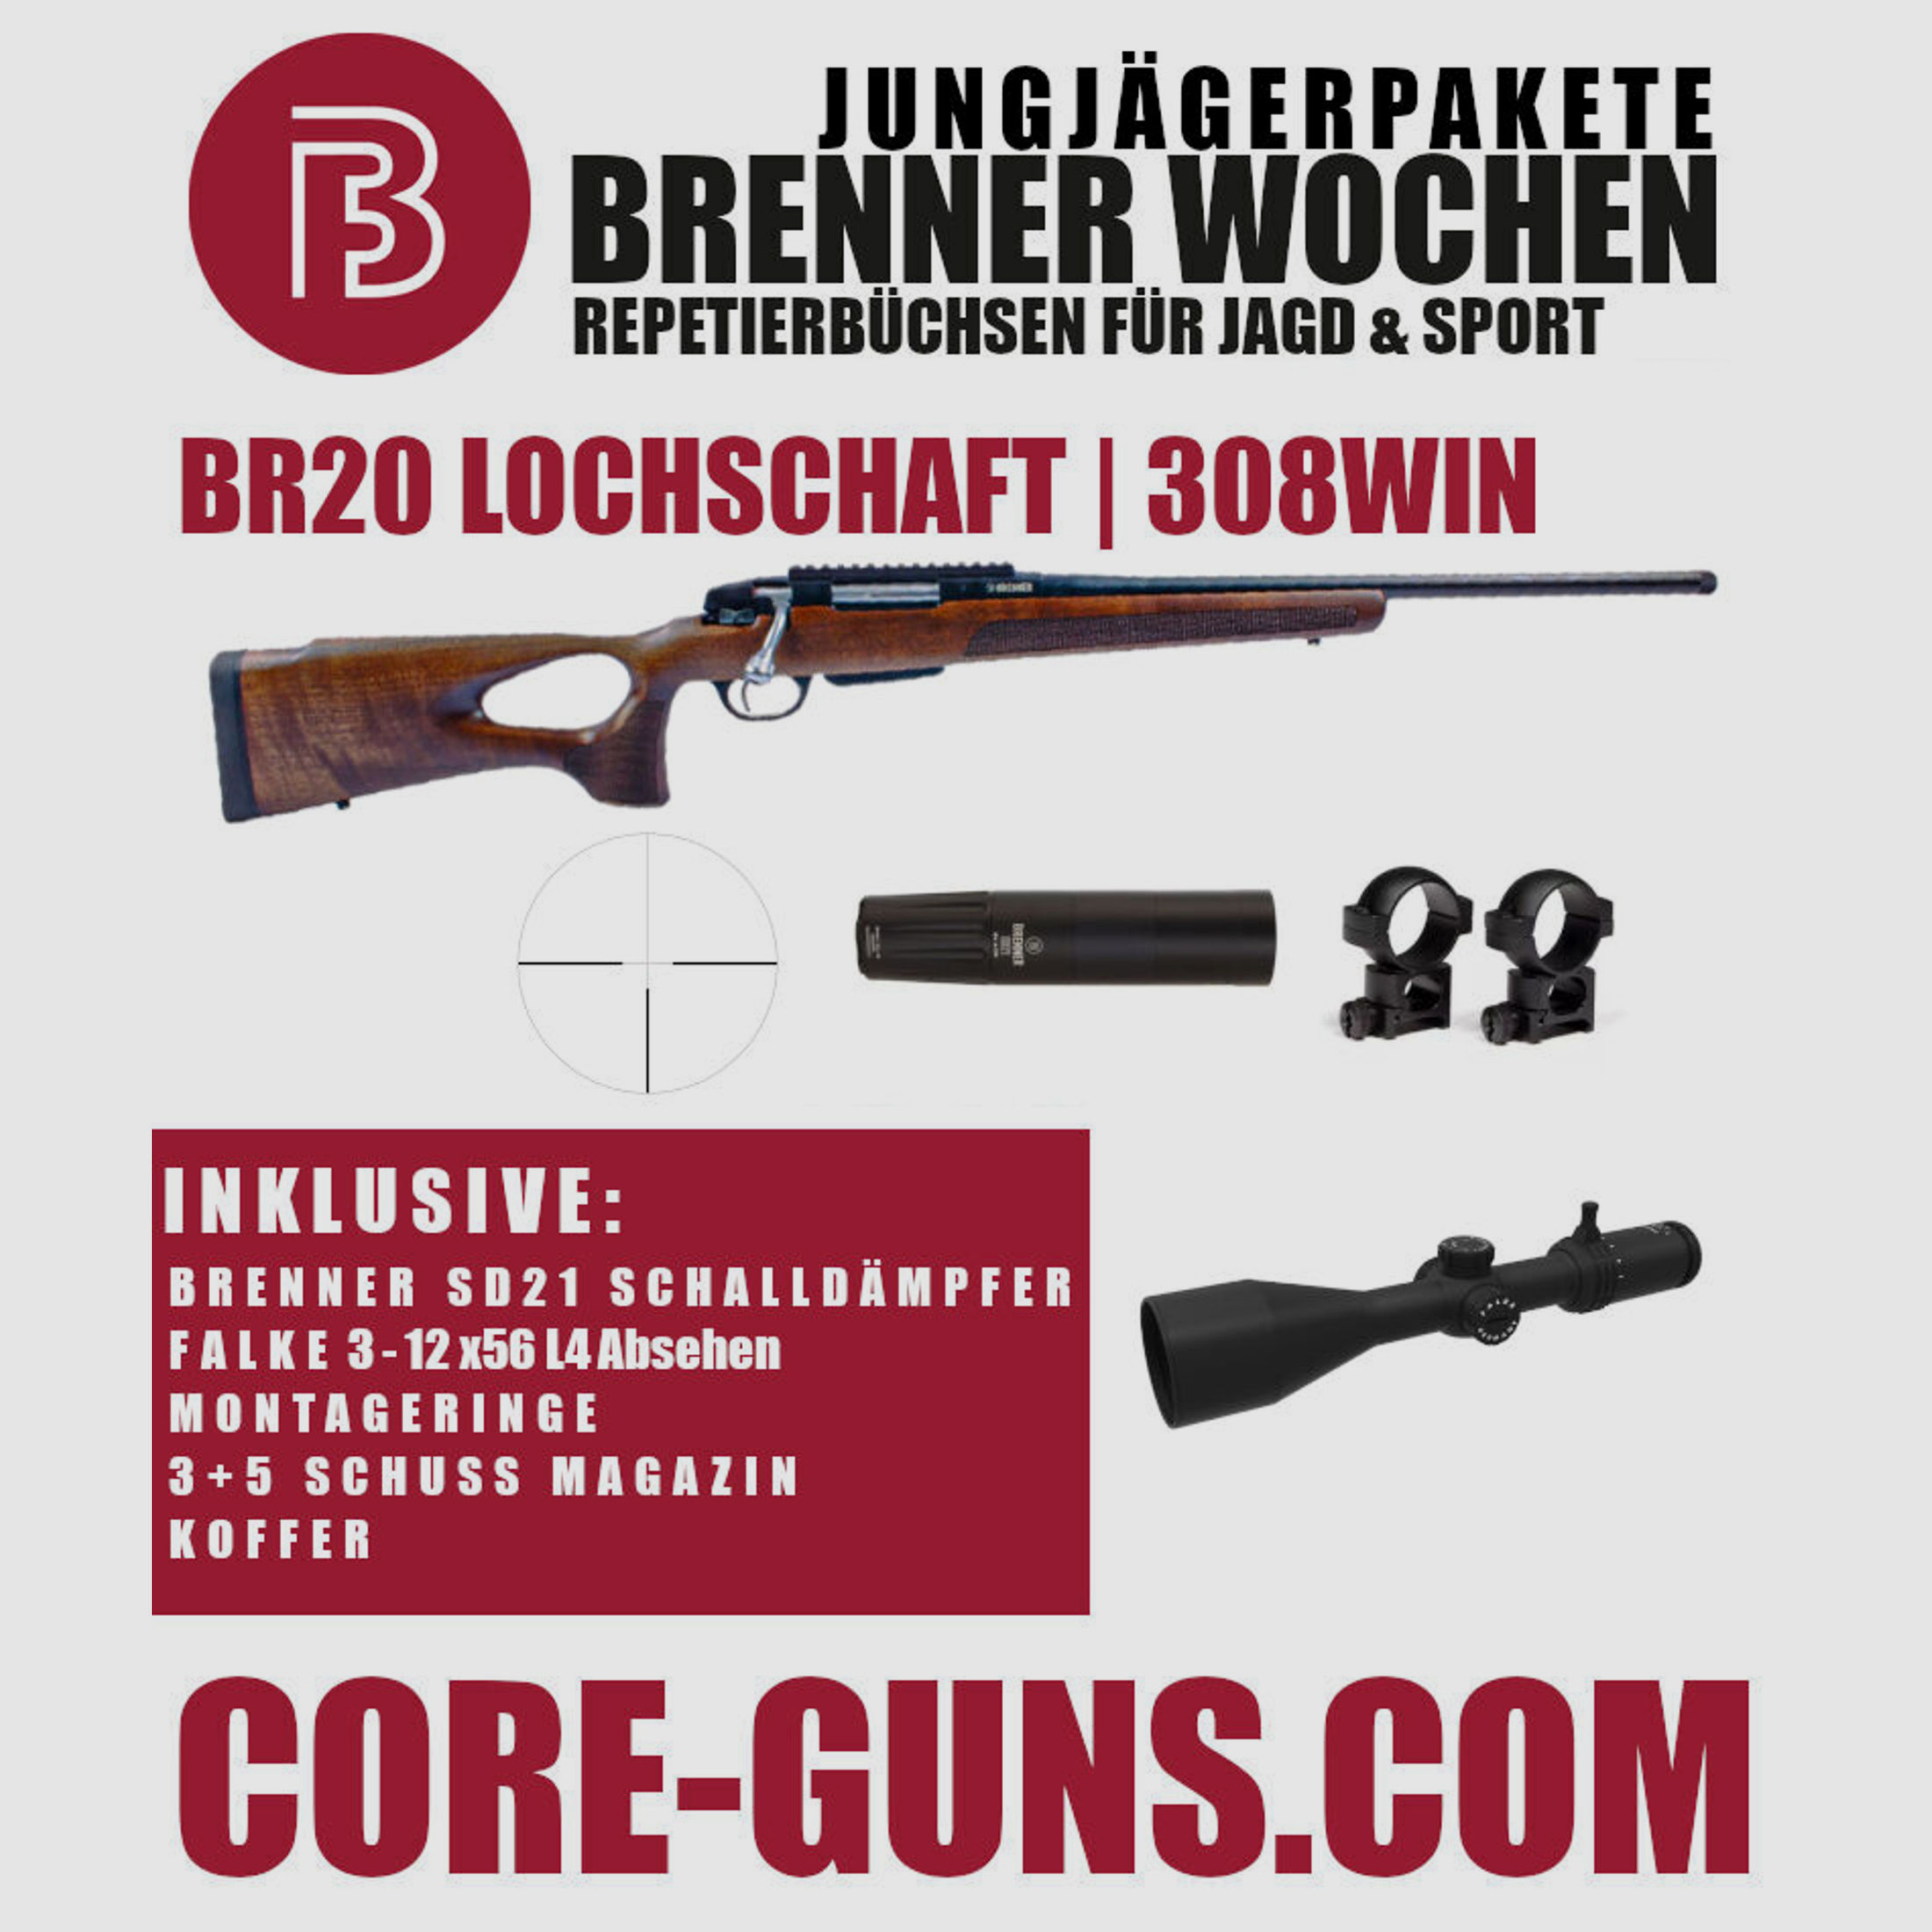 Brenner BR20 Lochschaft + Brenner Schalldämpfer SD21 + Falke 3-12x56	 + Montageringe - Jungjägerspecial